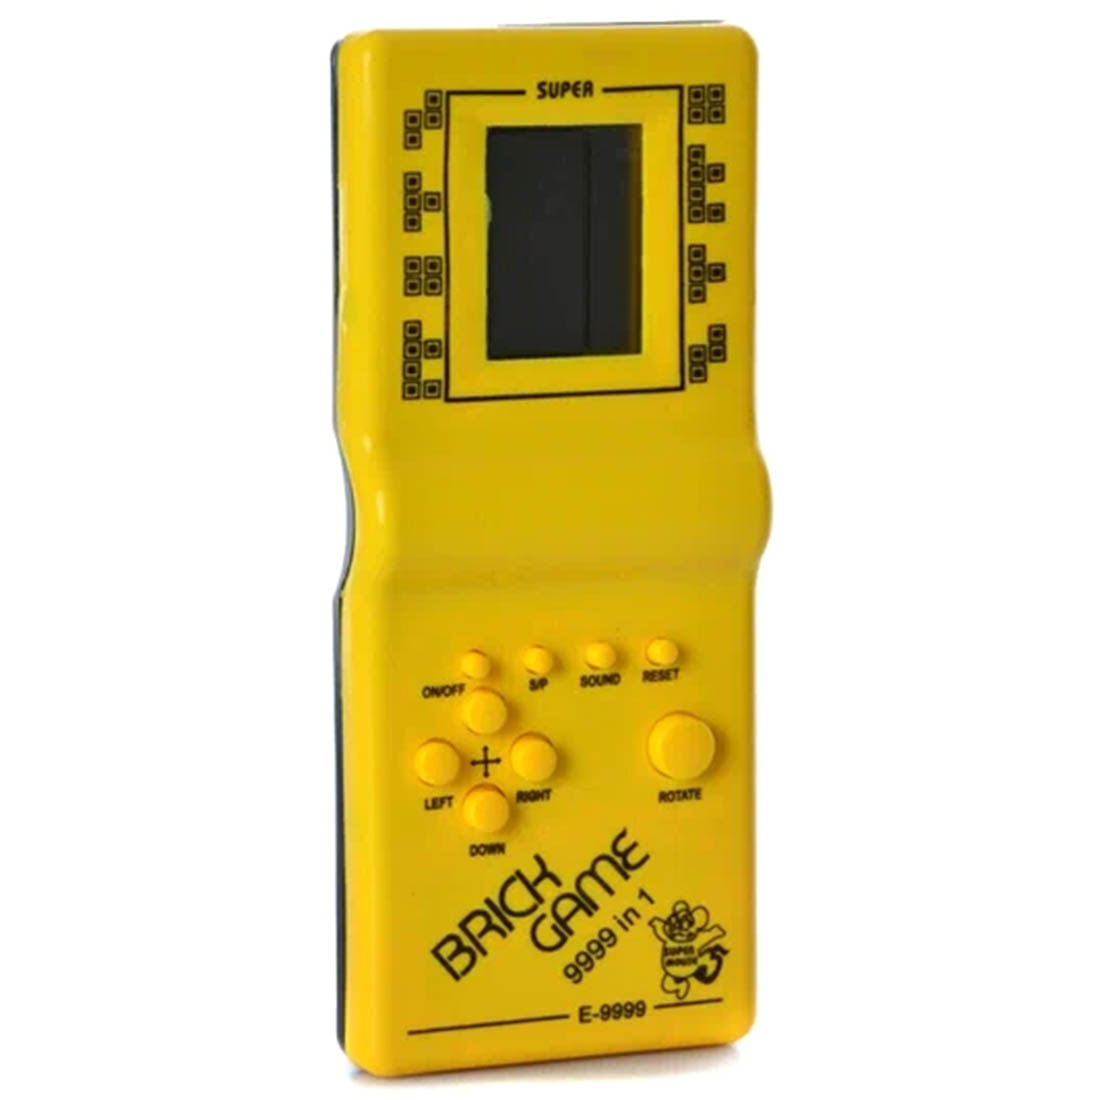 Тетрис классический Brick Game, 9999 в 1, цвет желтый